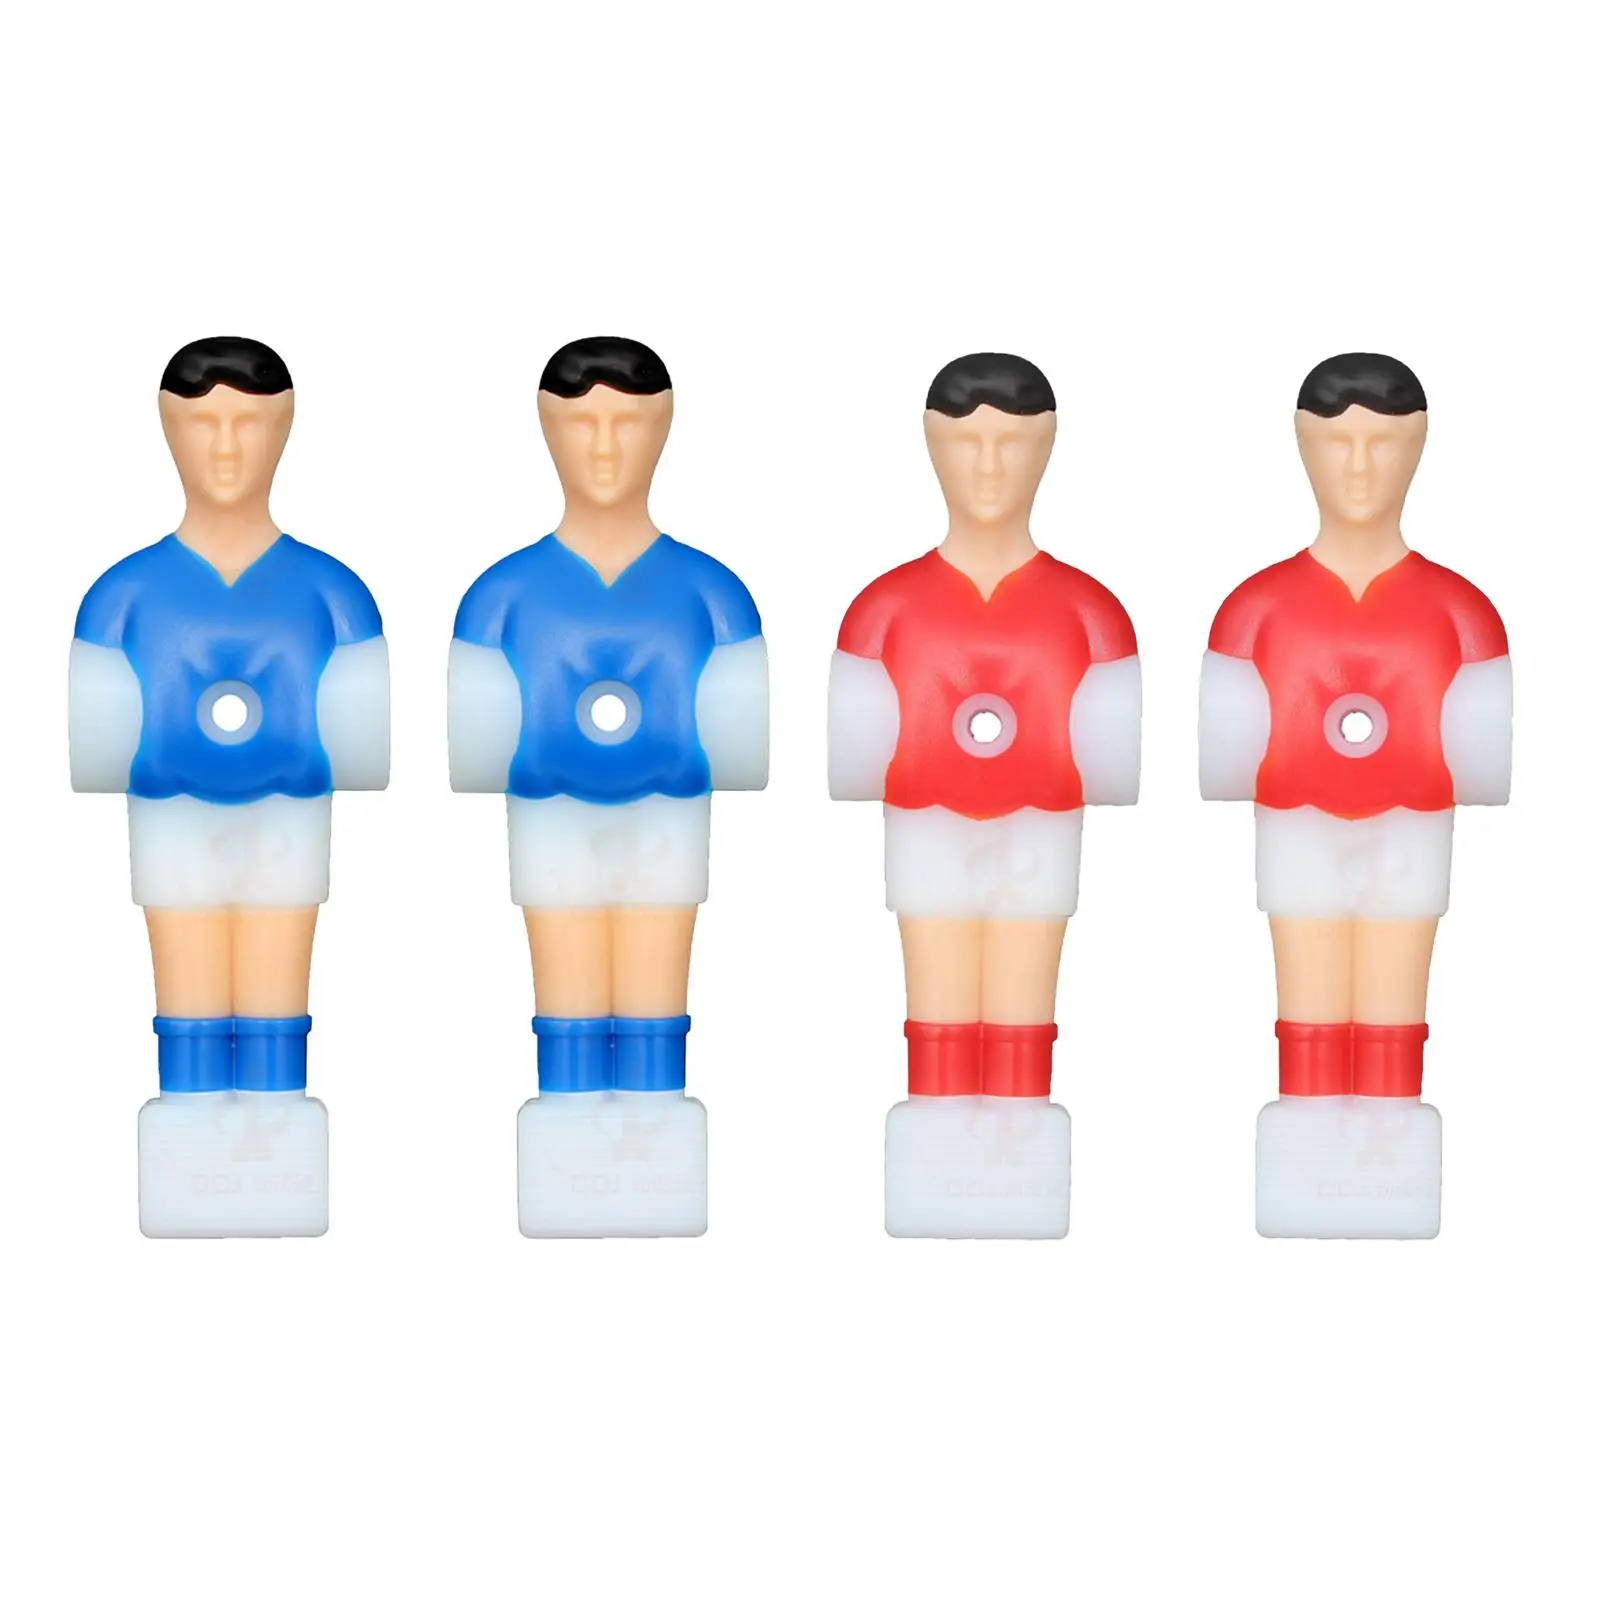 4Pcs Foosball Men Replacement Football Players Figures Toys Football Player